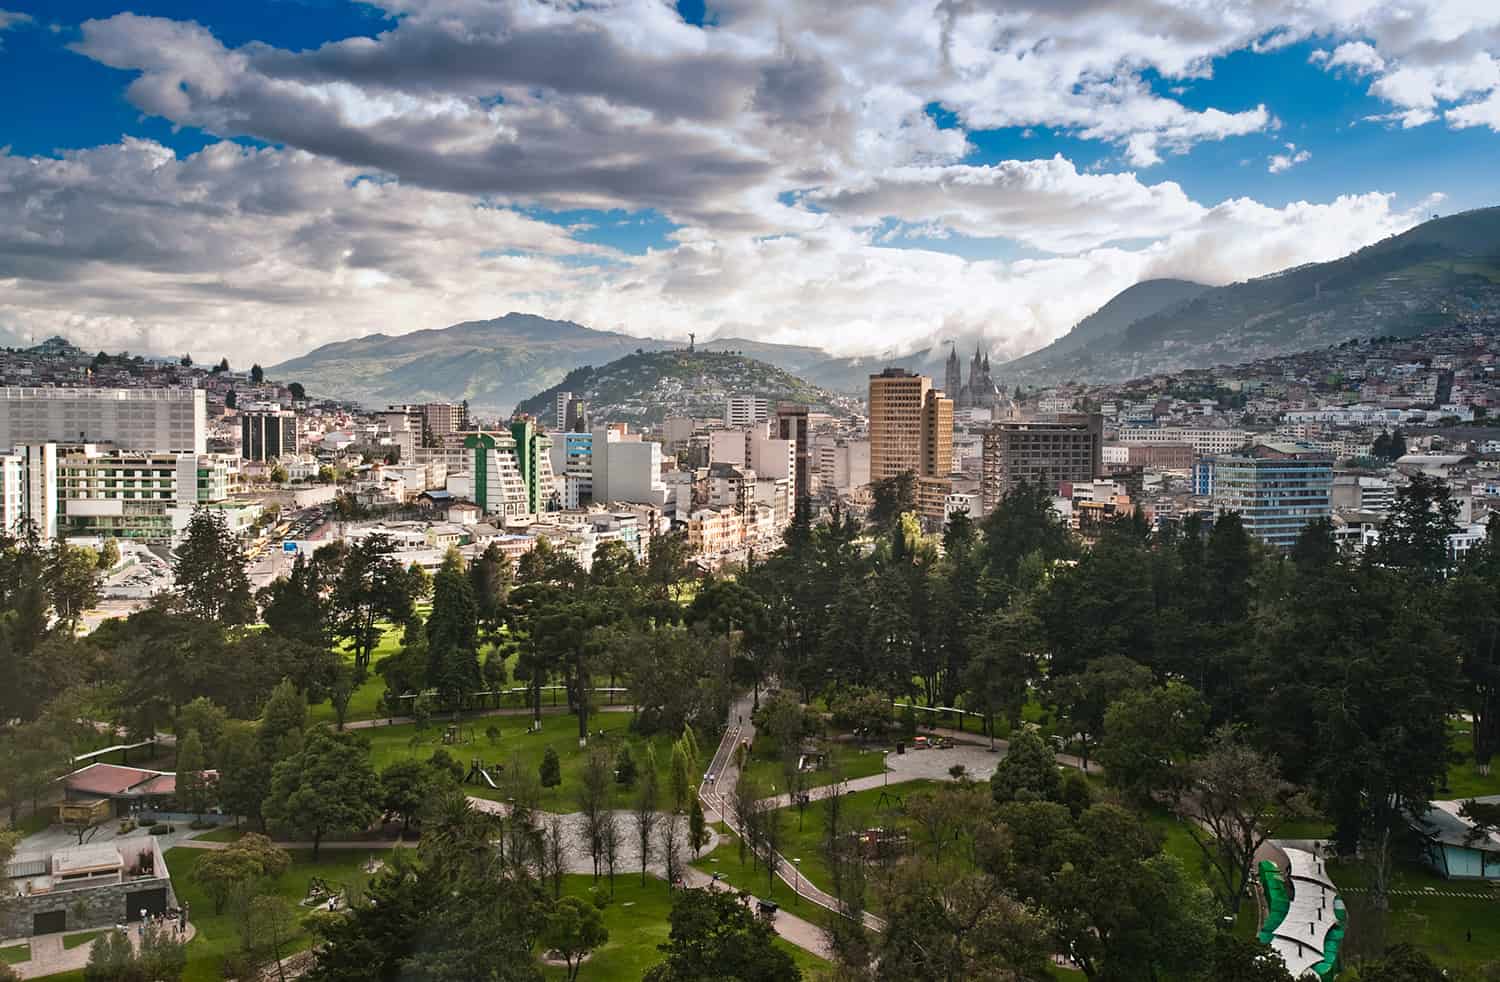 Elevated view of Quito, Ecuador